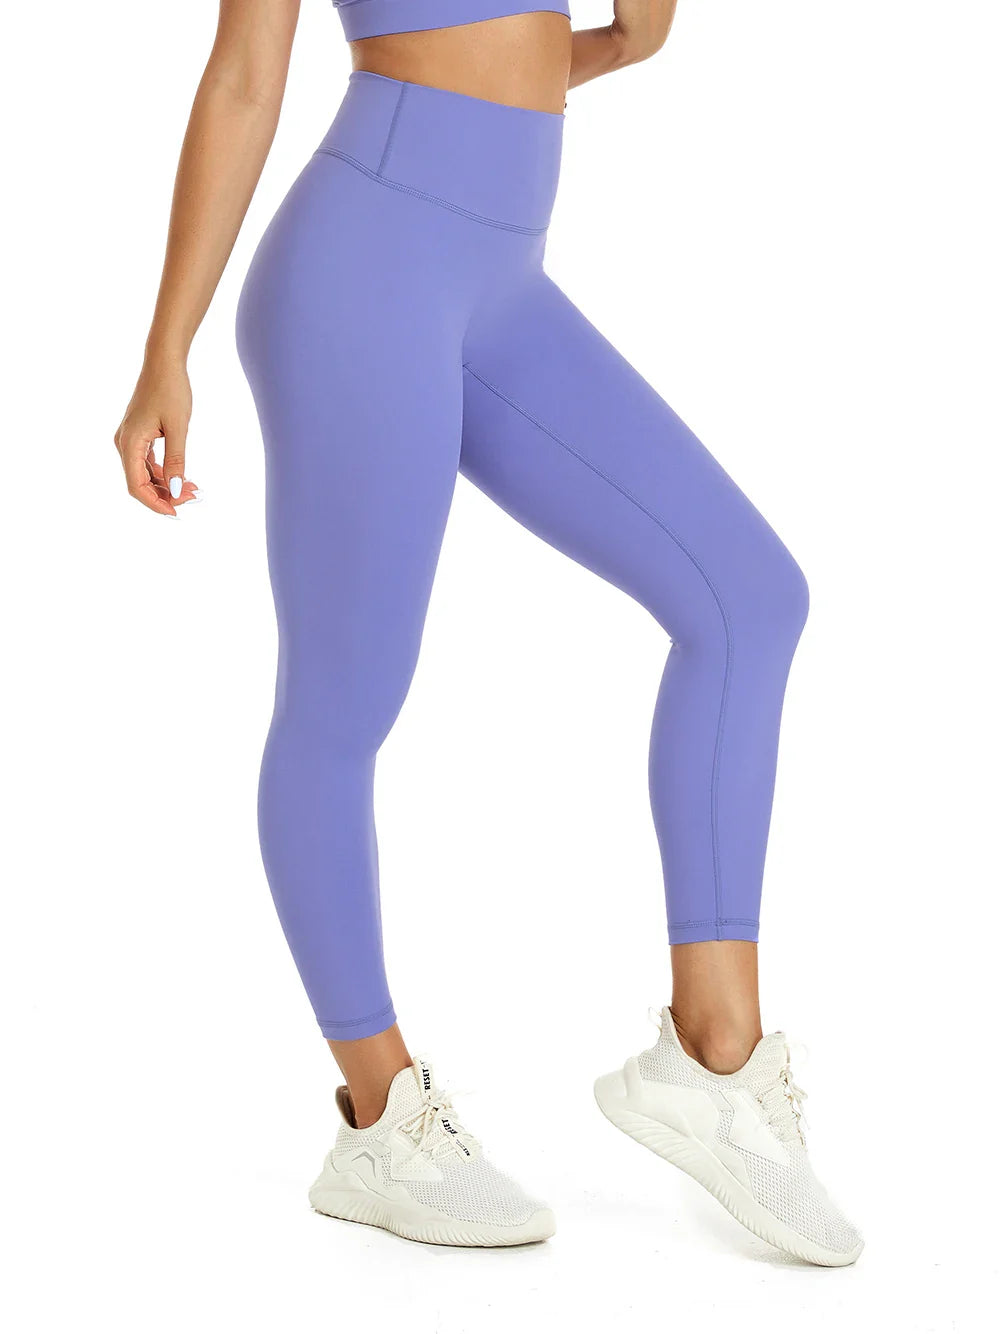 Canmol Rhythm Classic Women Leggings: Buttery Soft Yoga Pants, Curved Contour Seam Fitness Legging